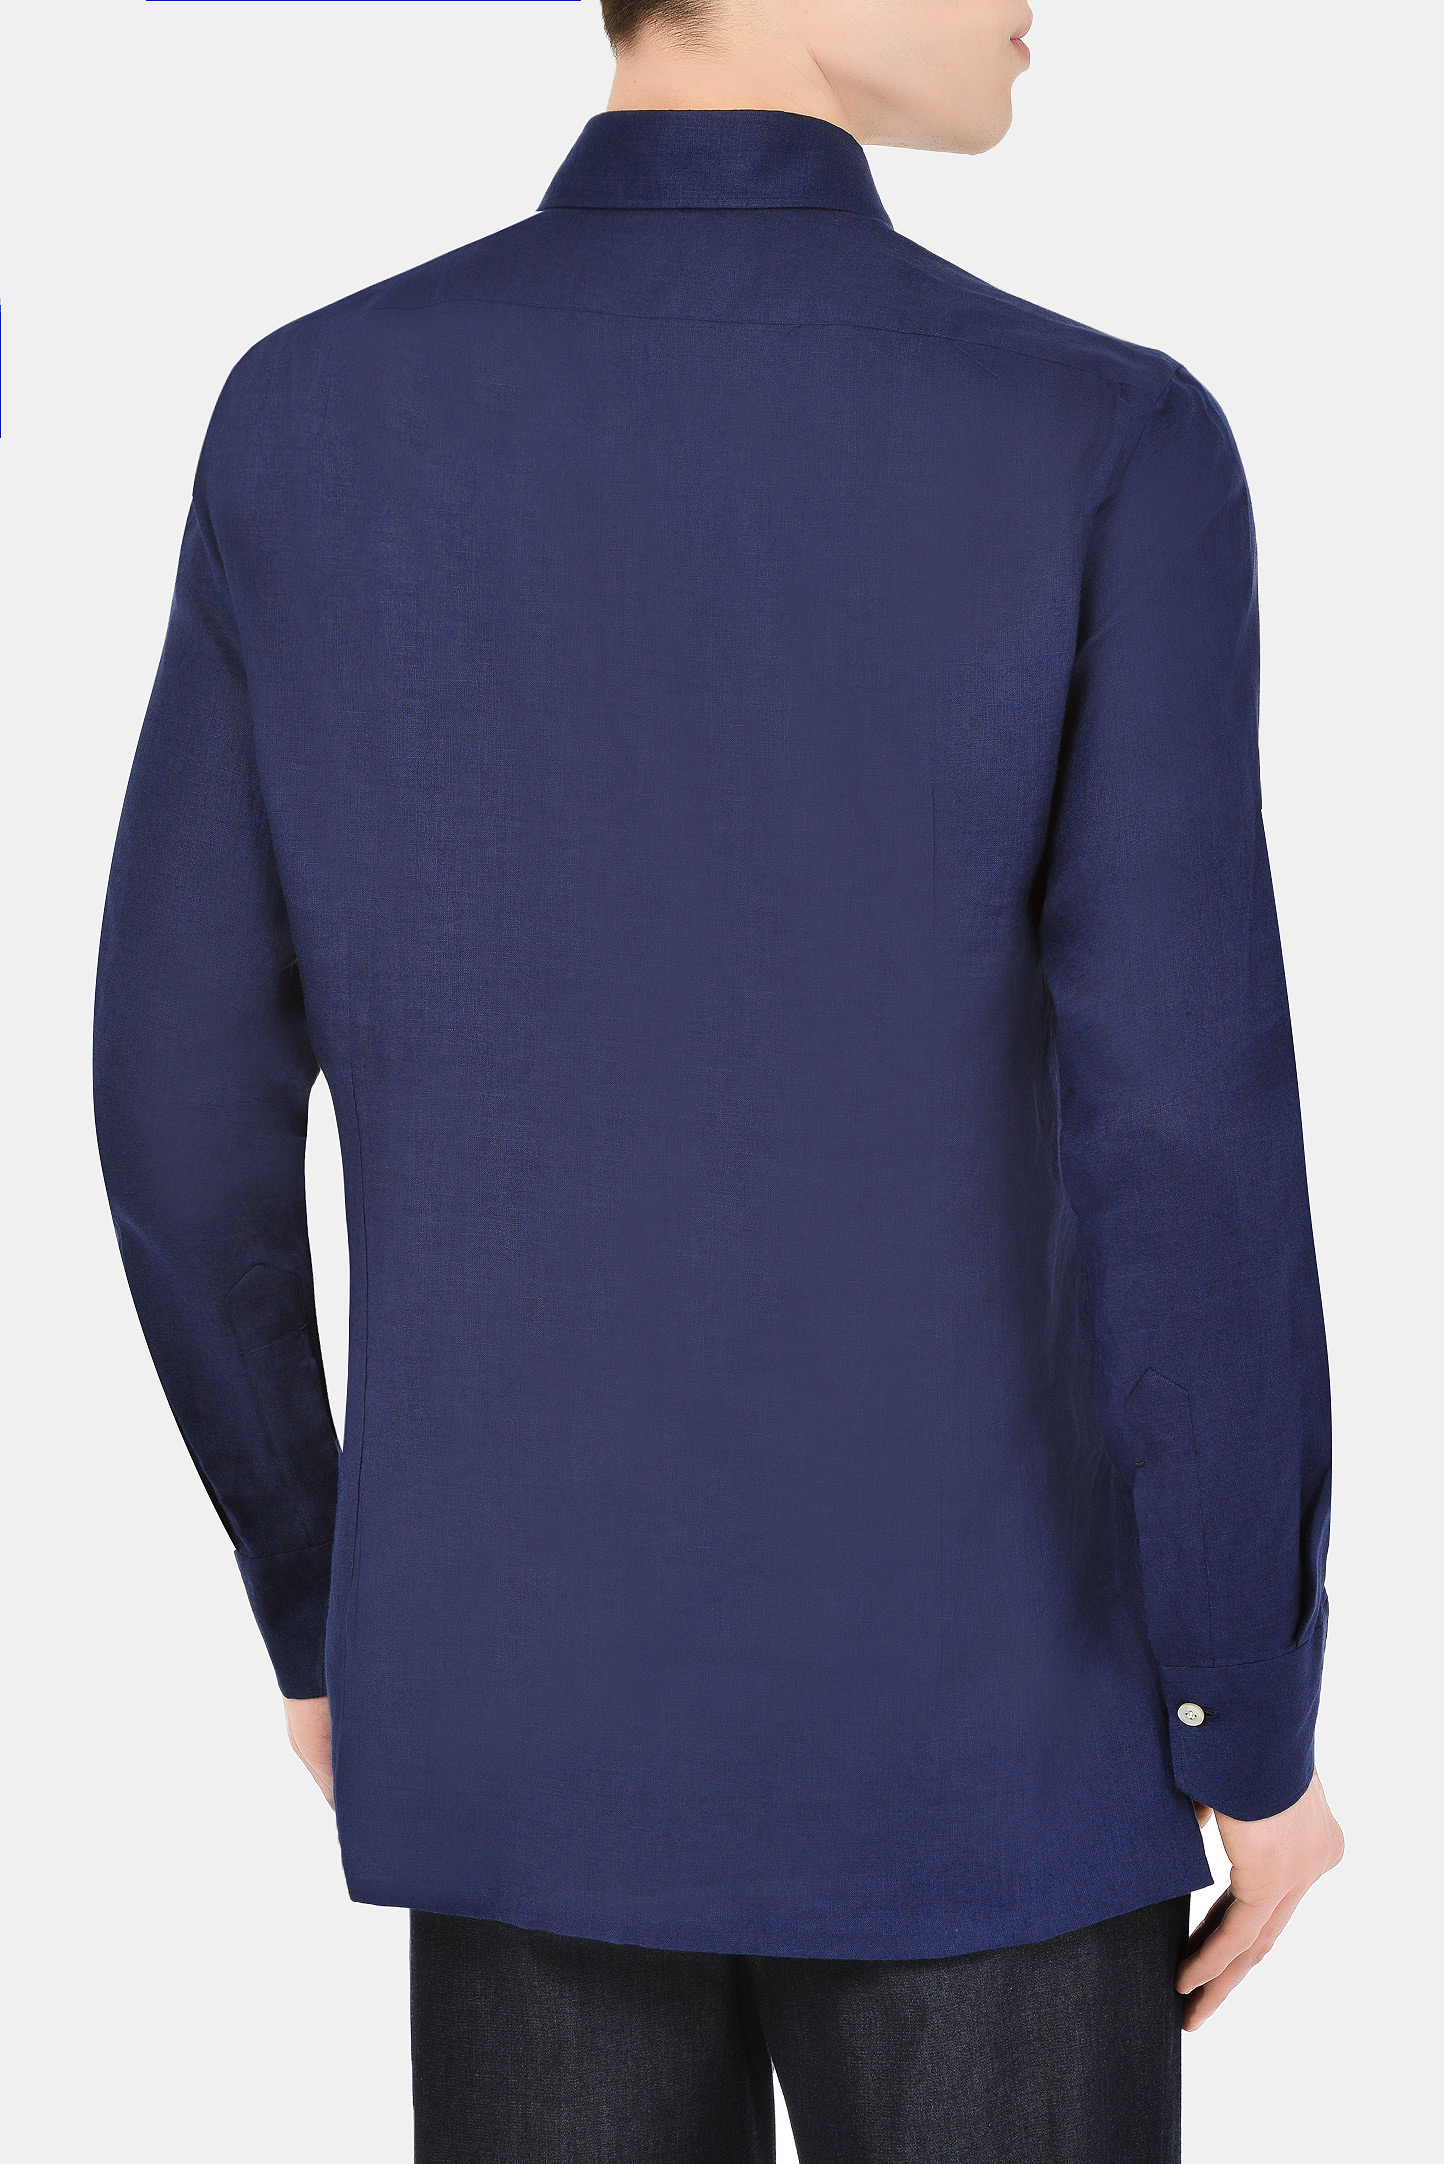 Рубашка KITON UMCNERH076860, цвет: Синий, Мужской